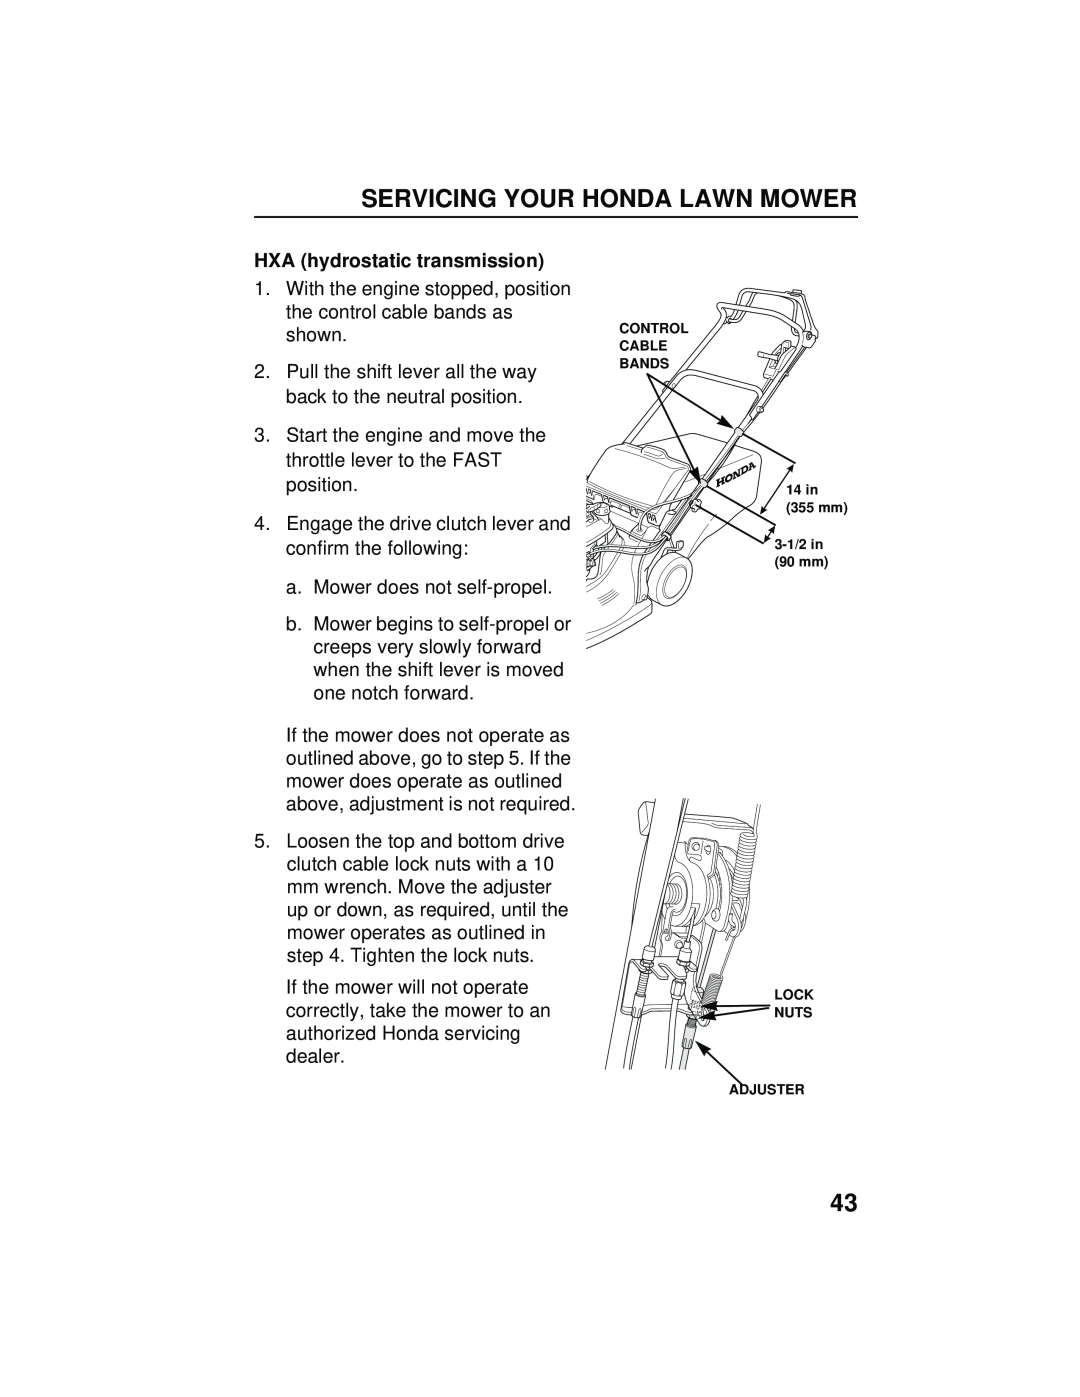 Honda Power Equipment HRB216TXA owner manual HXA hydrostatic transmission, Servicing Your Honda Lawn Mower 